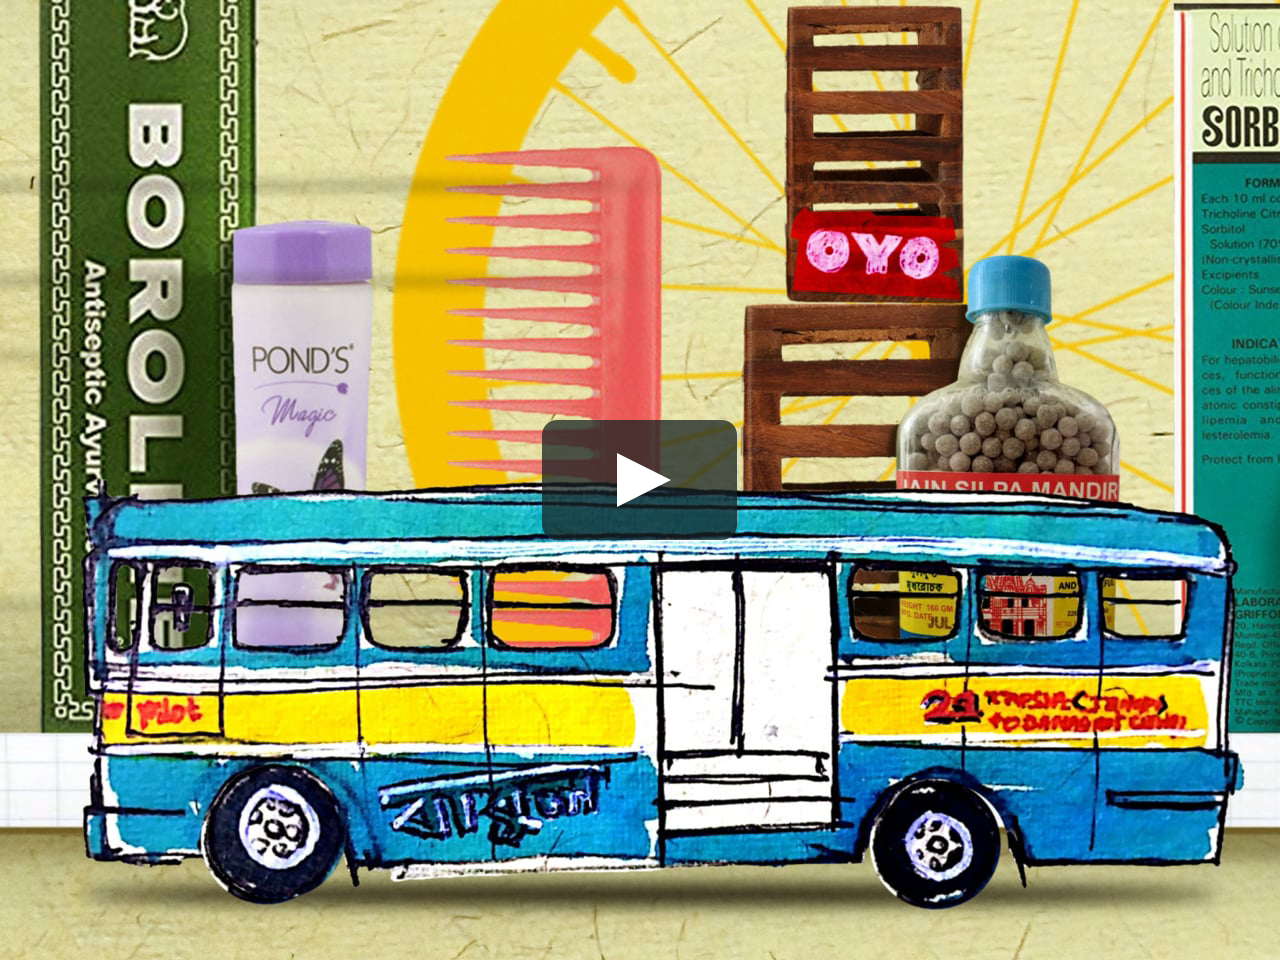 Riding a Bus in Kolkata | ANIMATED on Vimeo